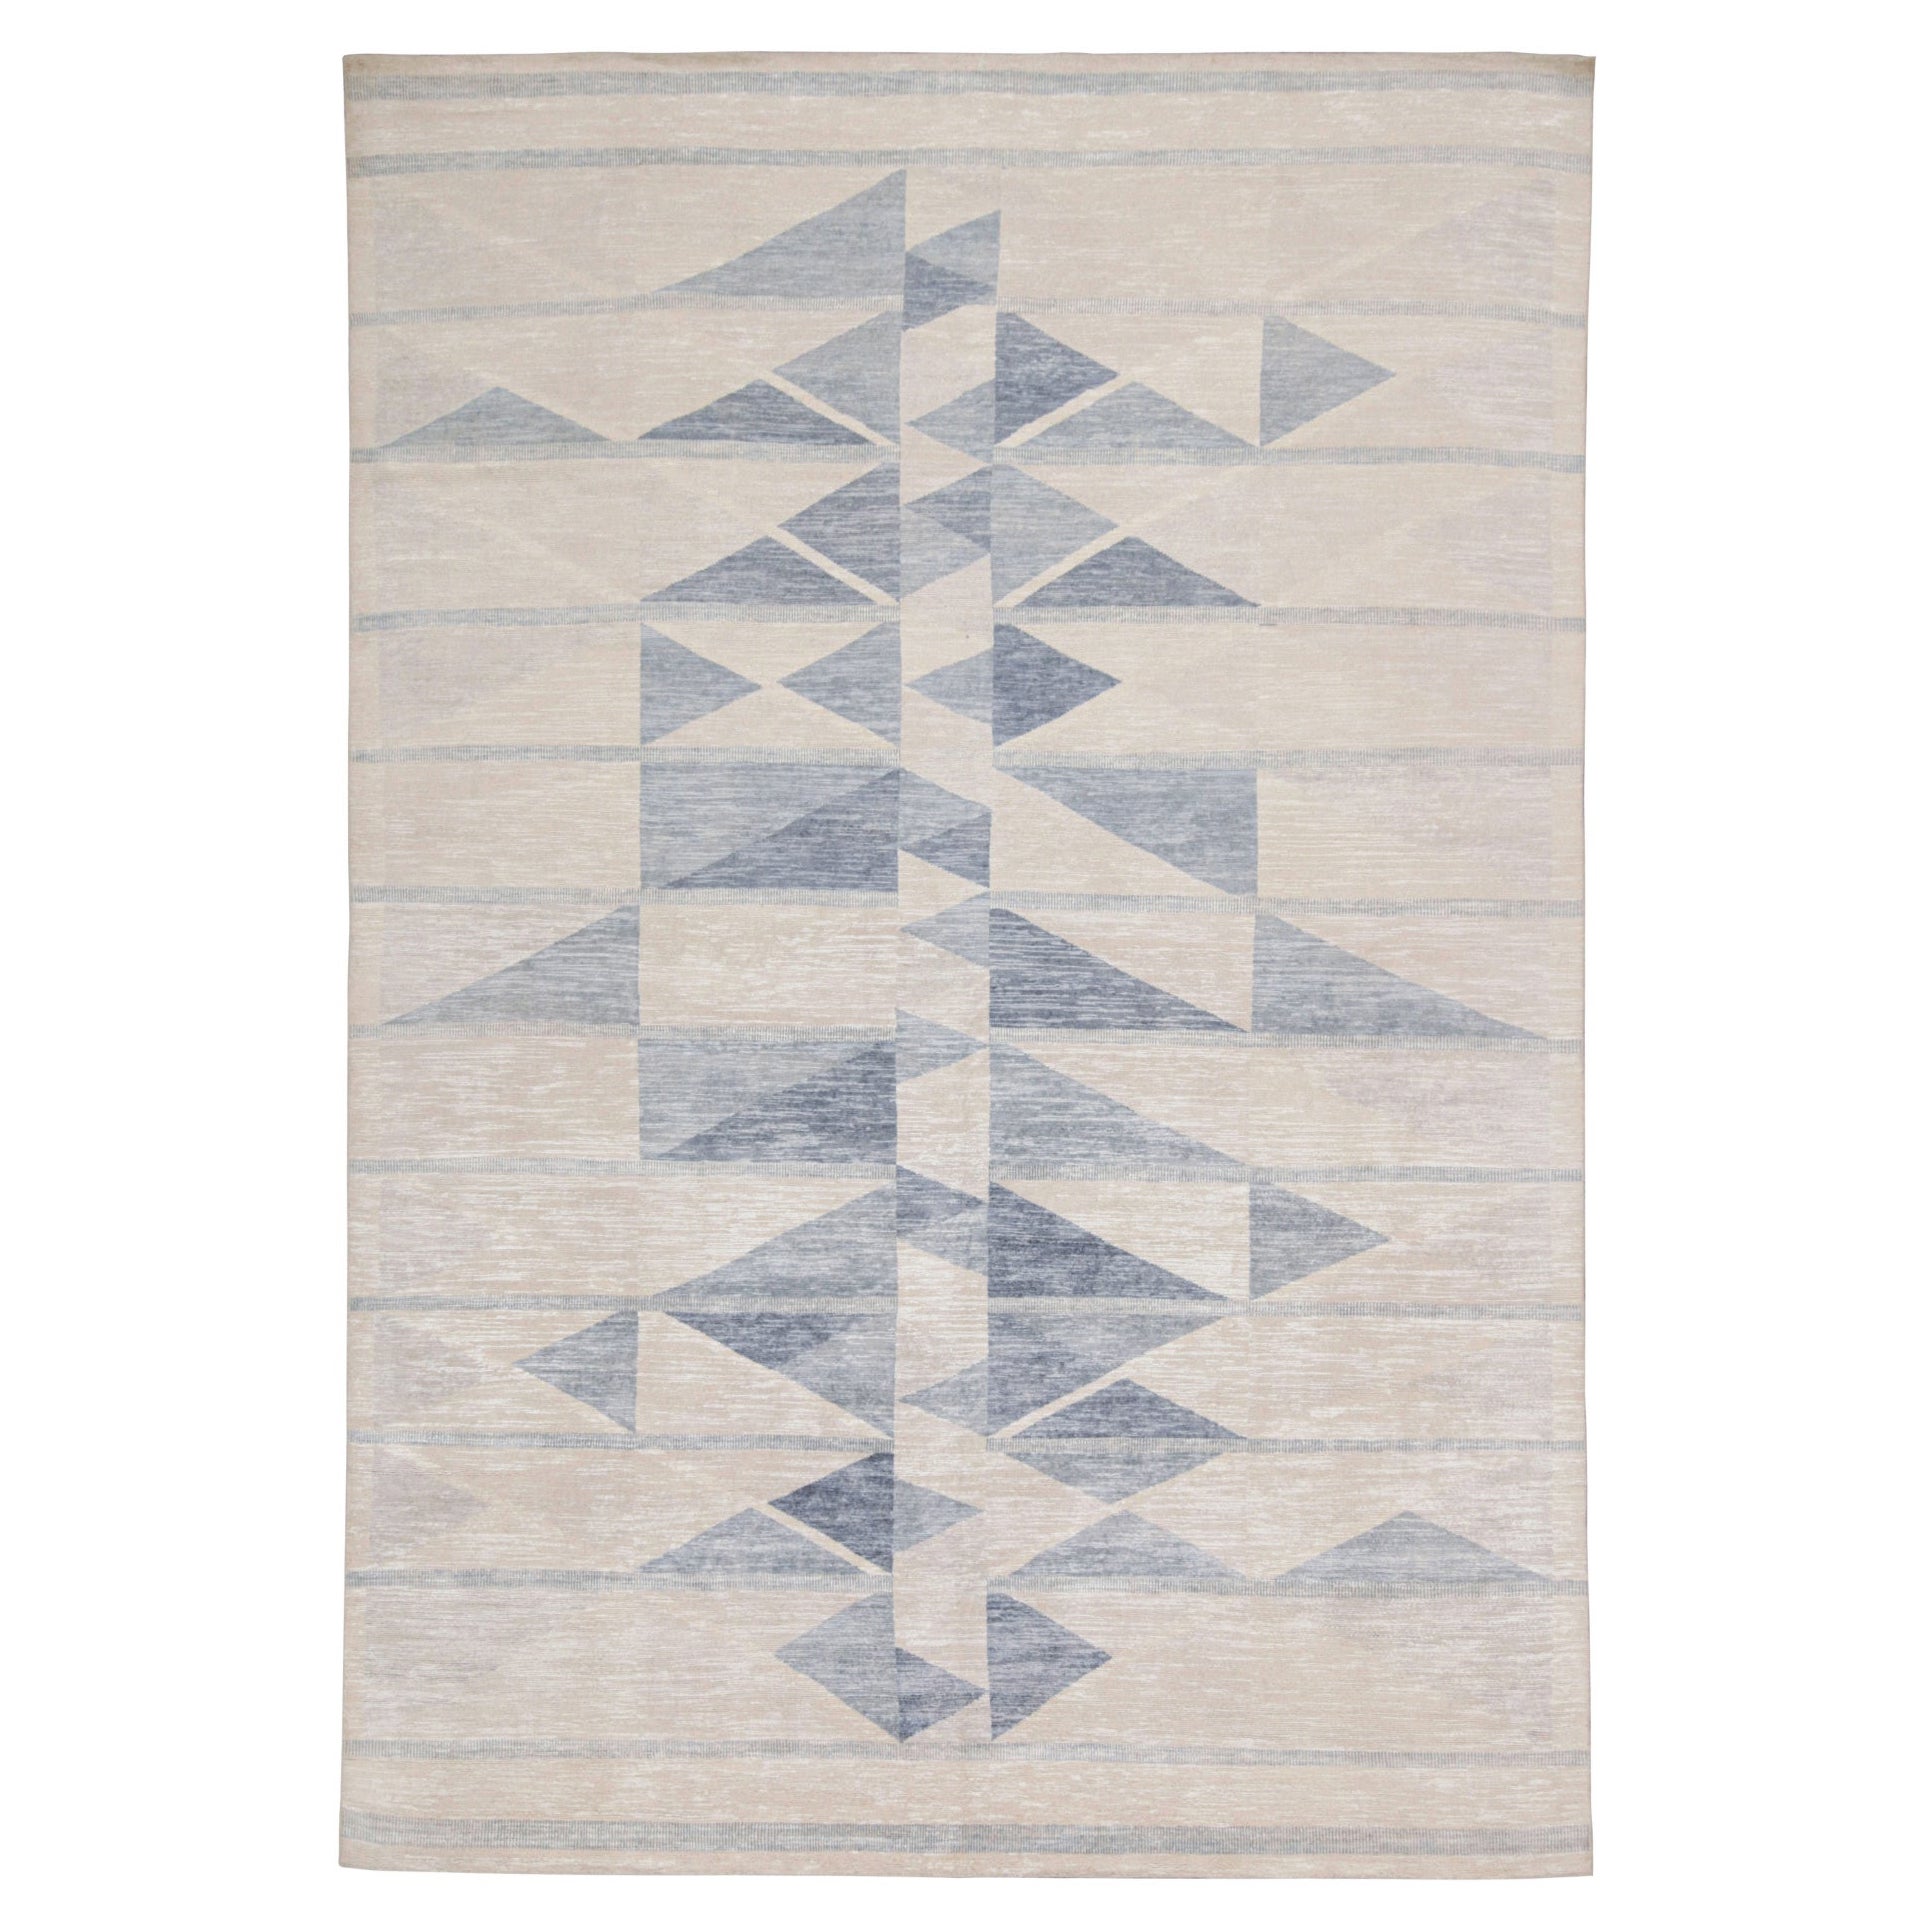 Rug & Kilim’s Scandinavian-Style Rug with Ivory & Blue Geometric Patterns